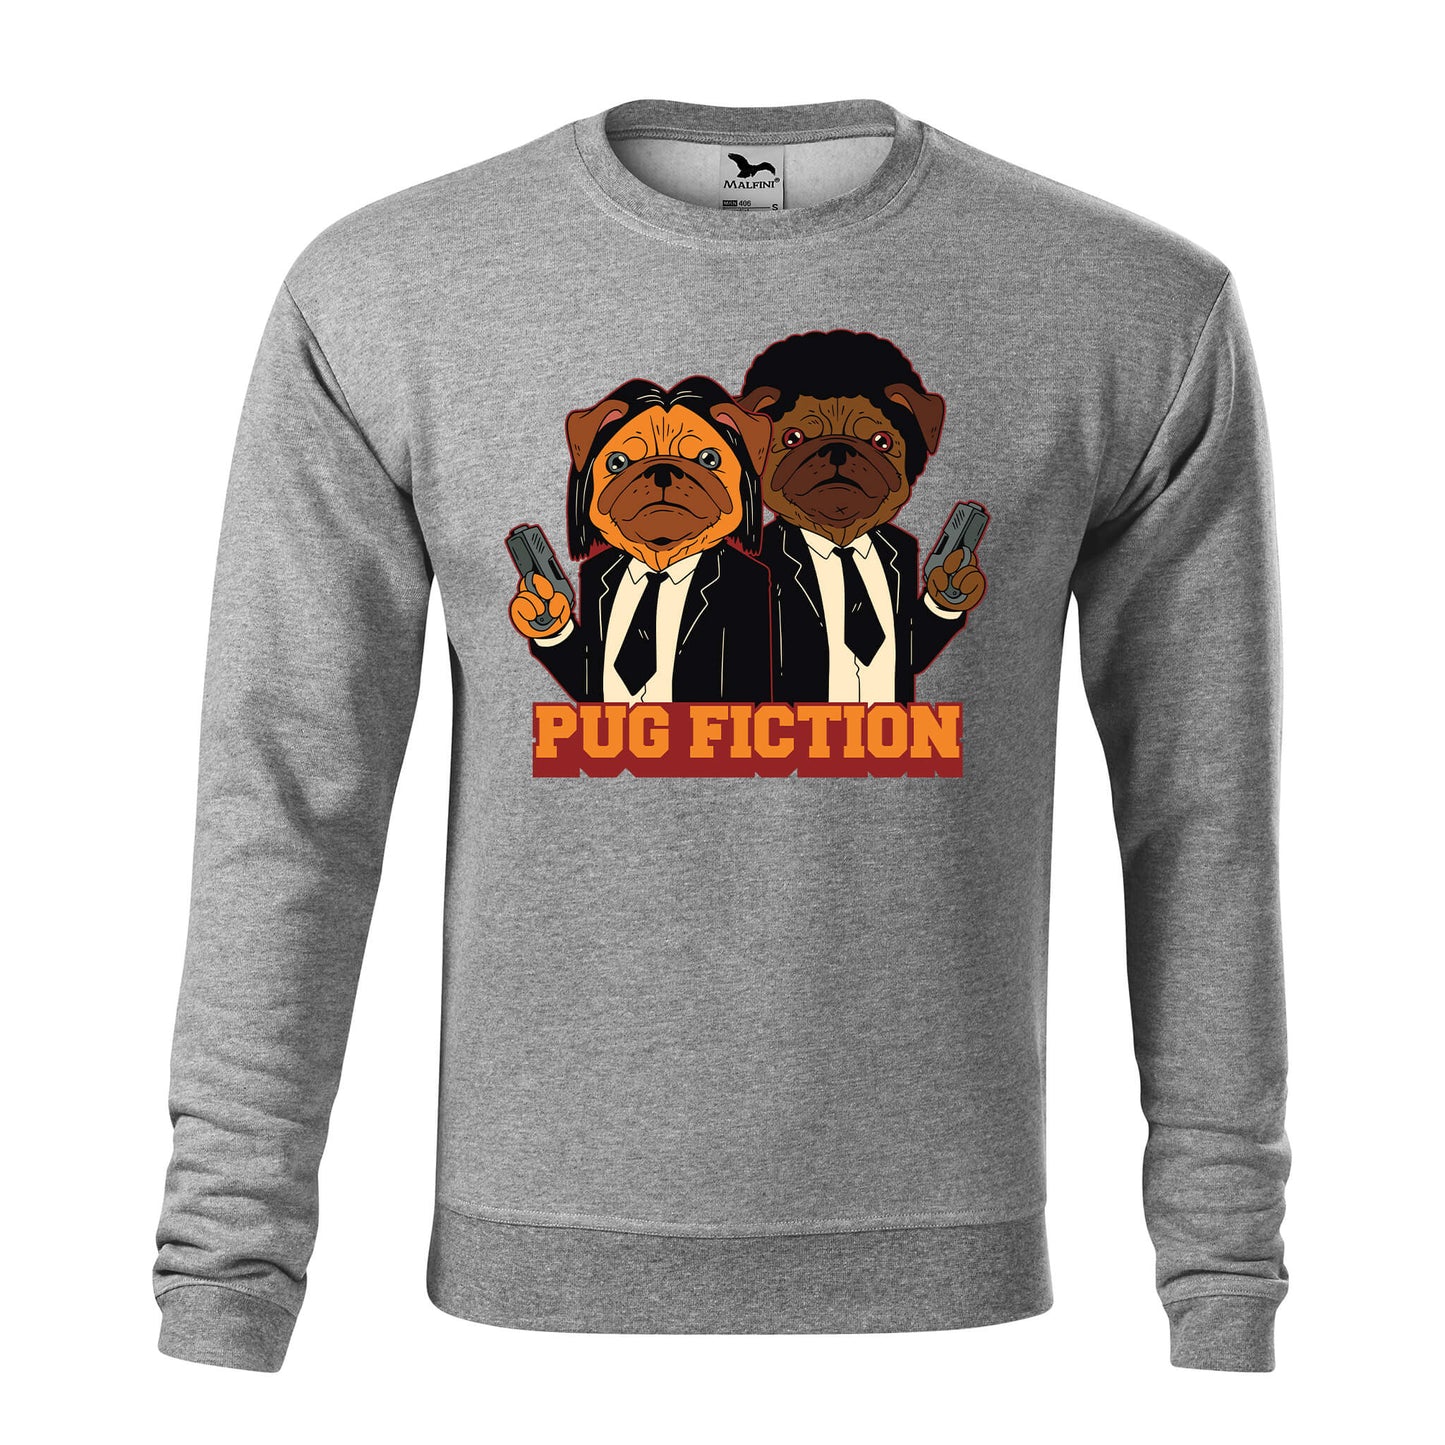 Pug Fiction sweatshirt - mens